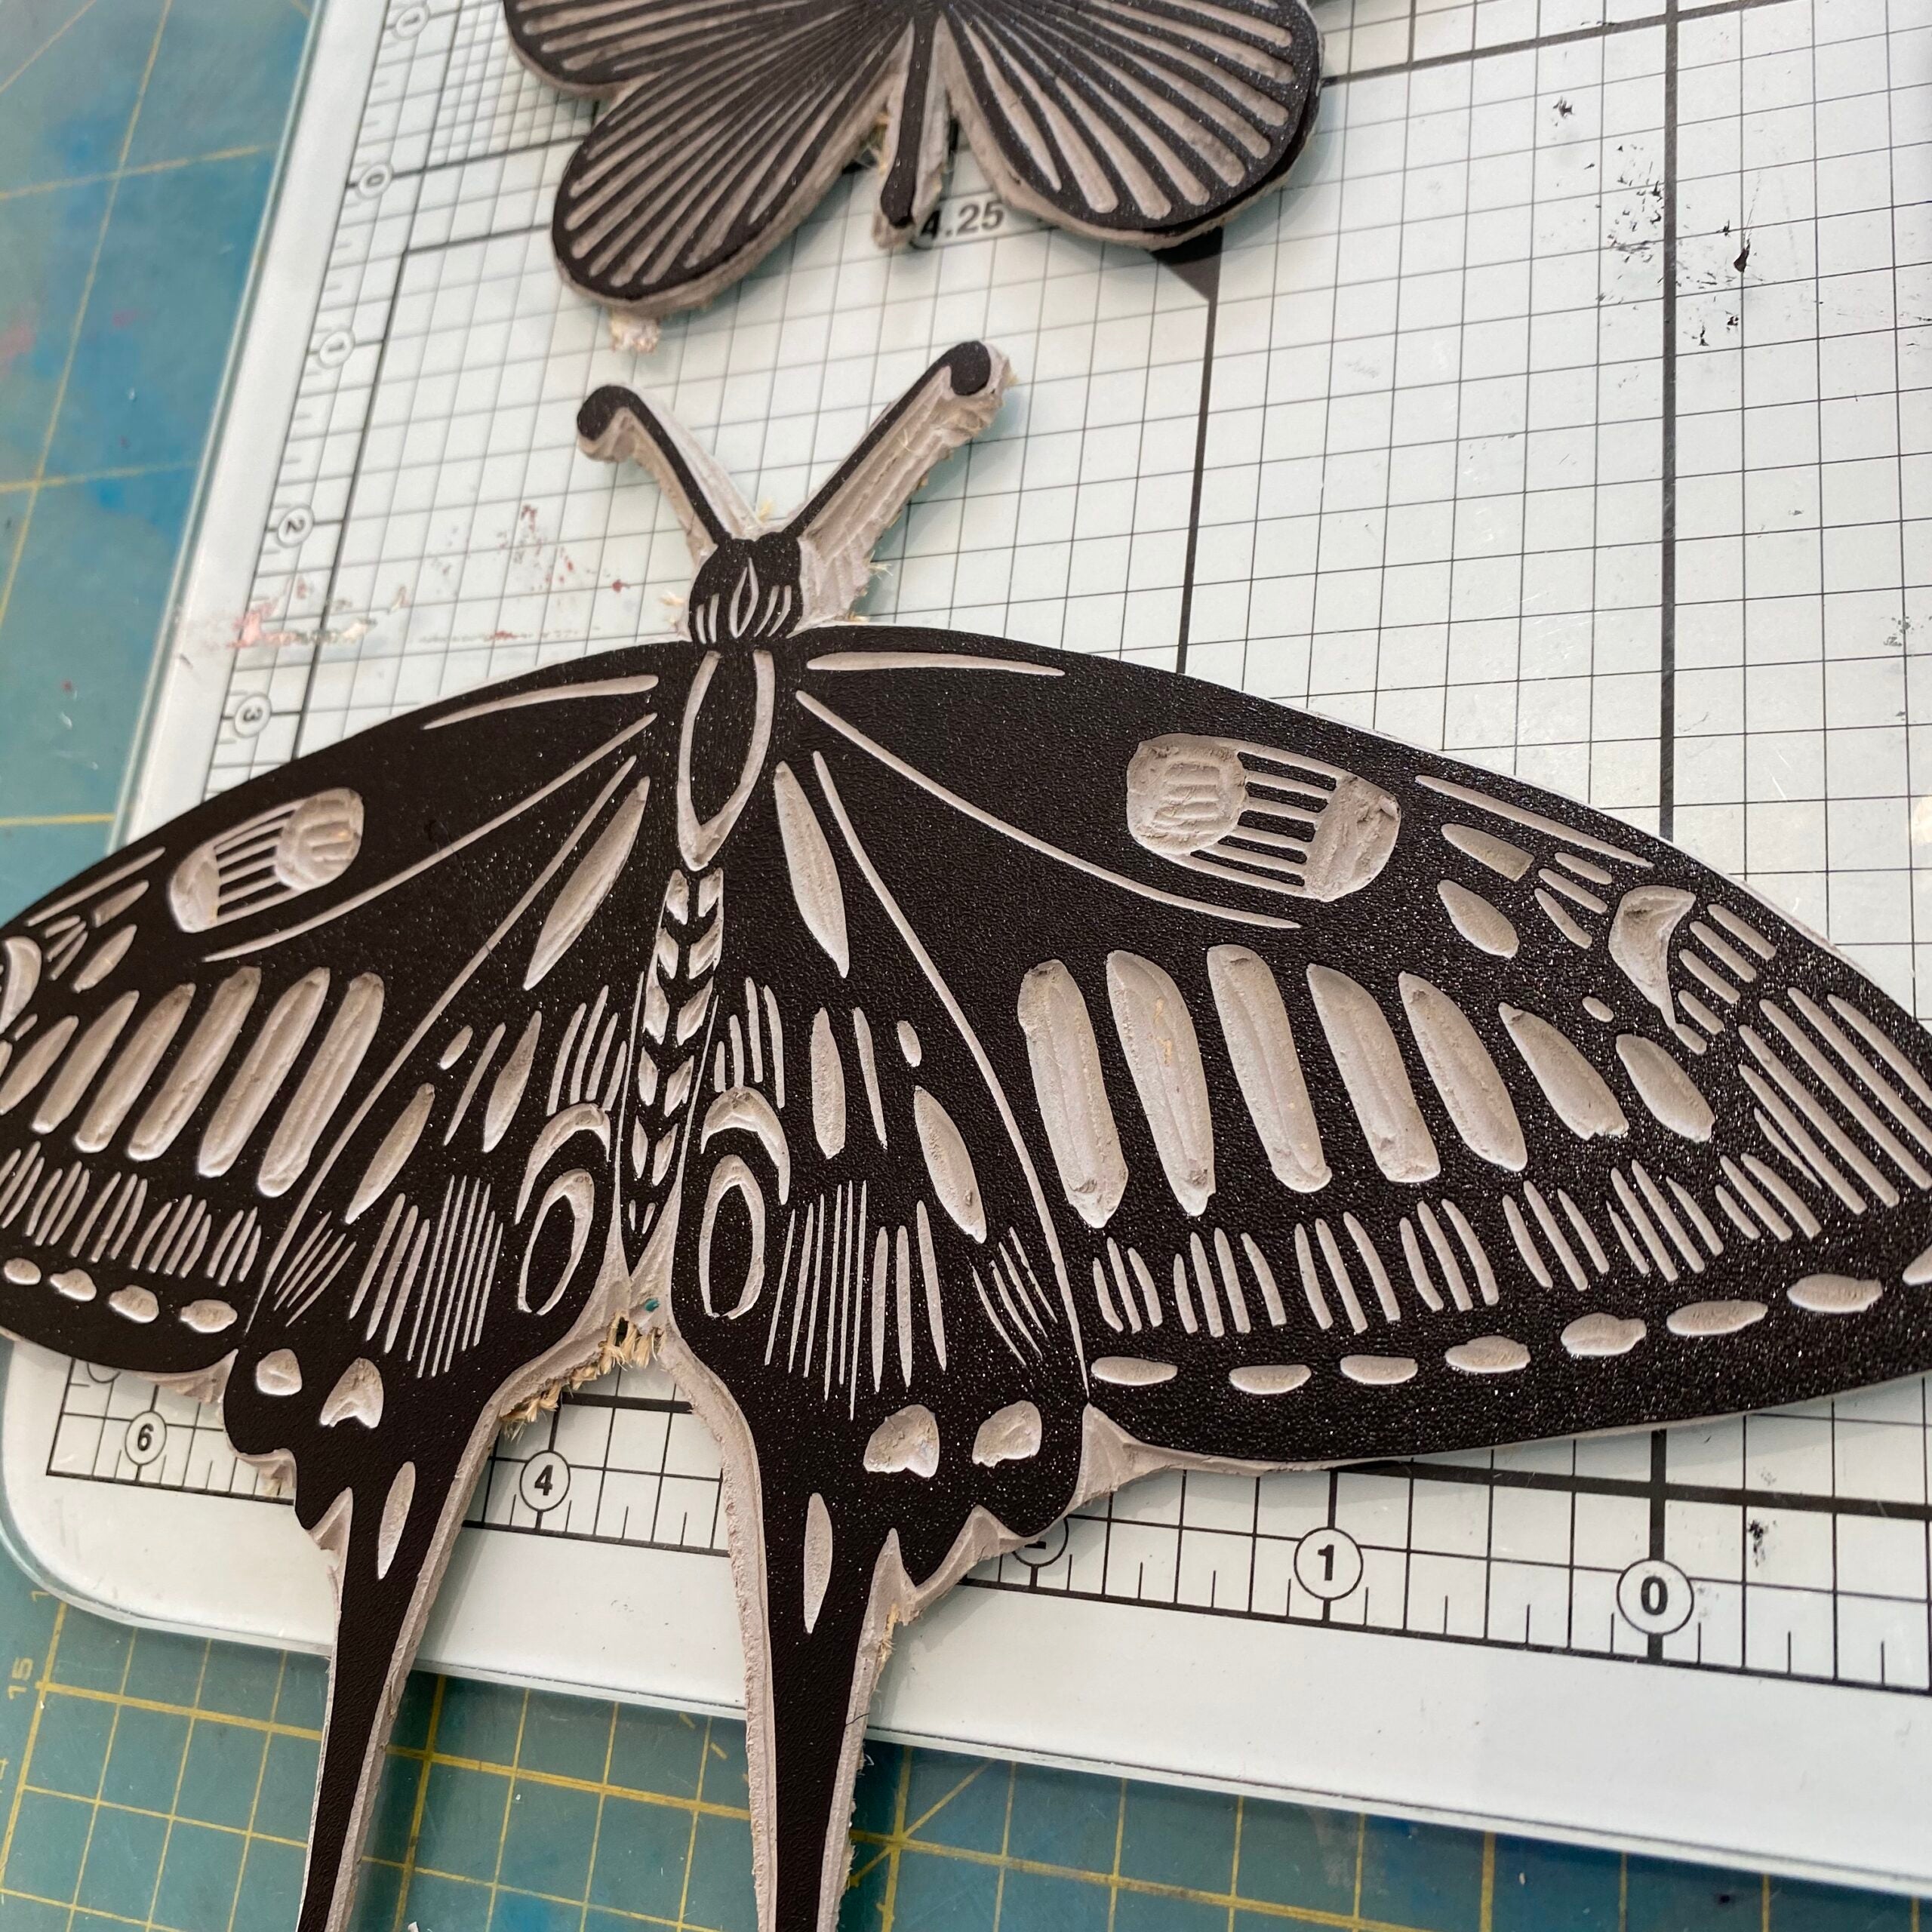 SALE - Swallowtail Butterfly - Original Linocut Print